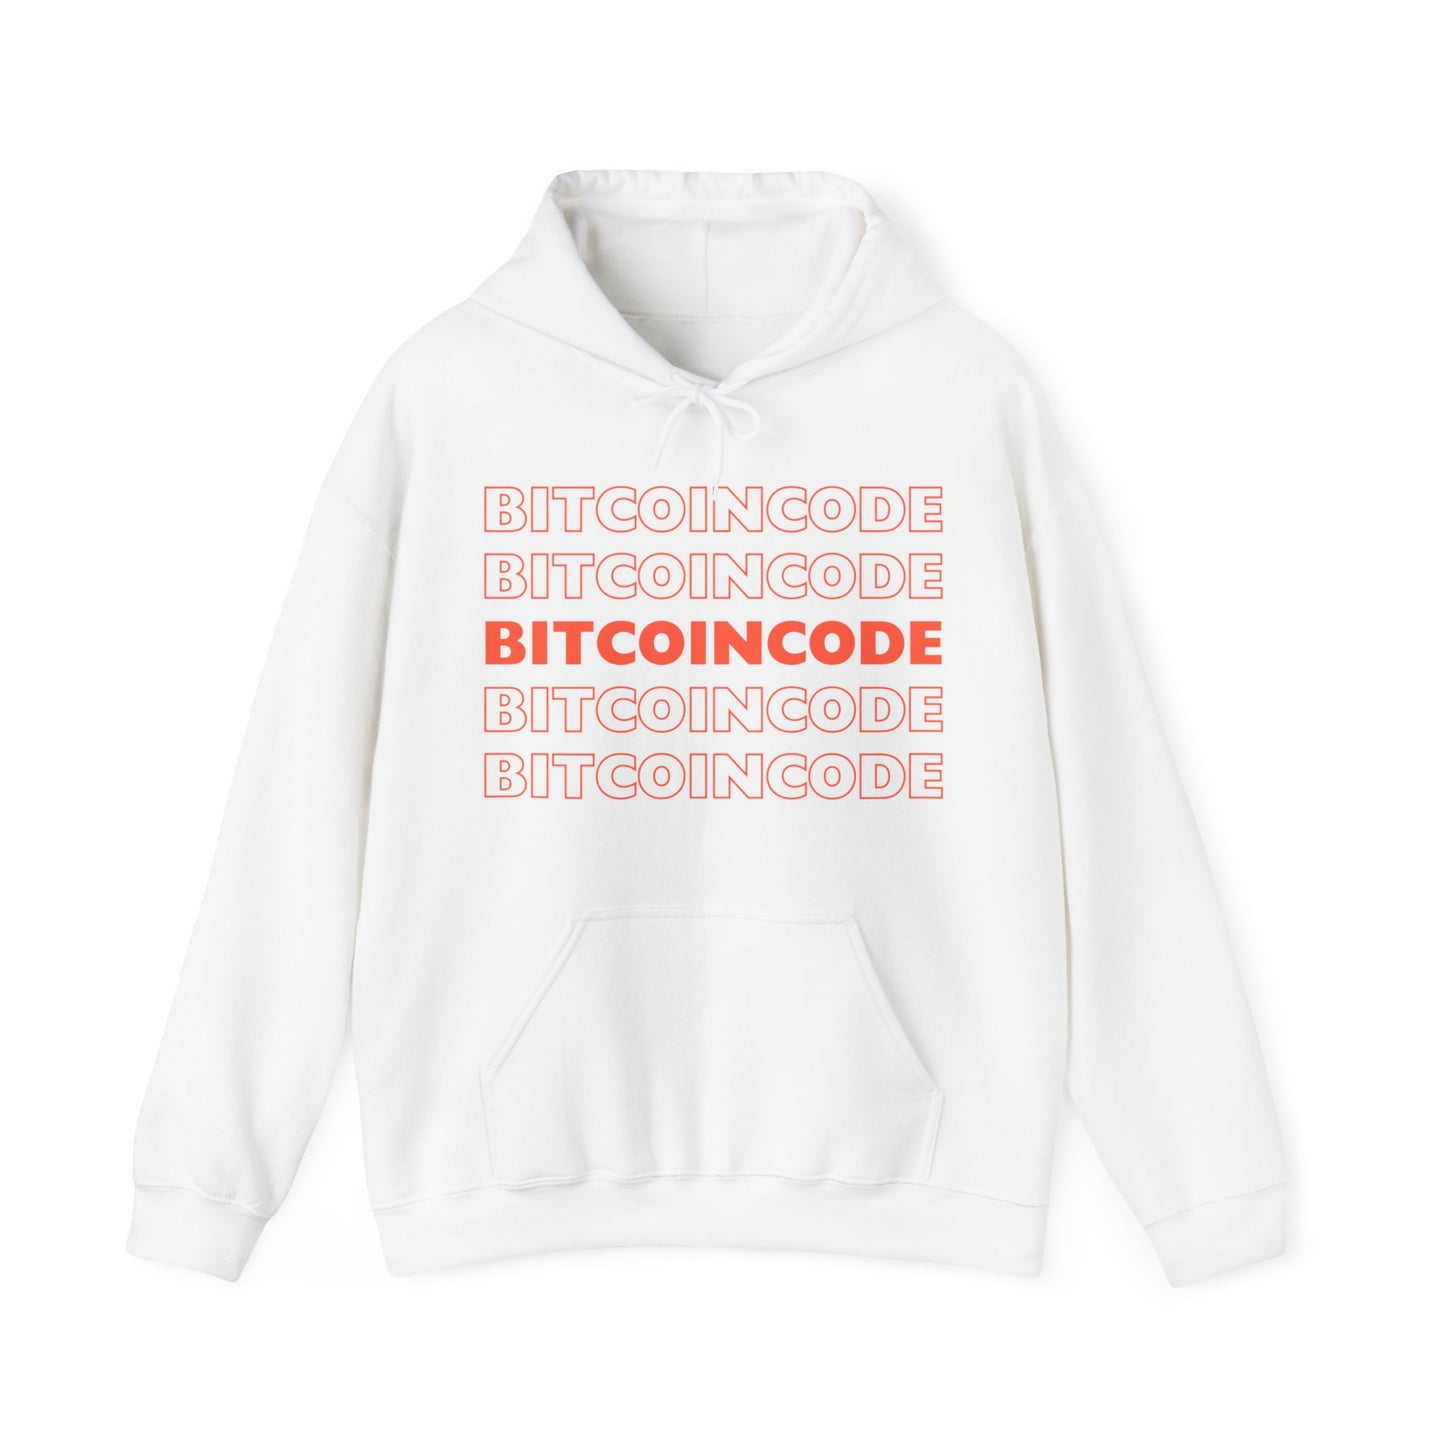 Bitcoincode Repeat Unisex Hoodie